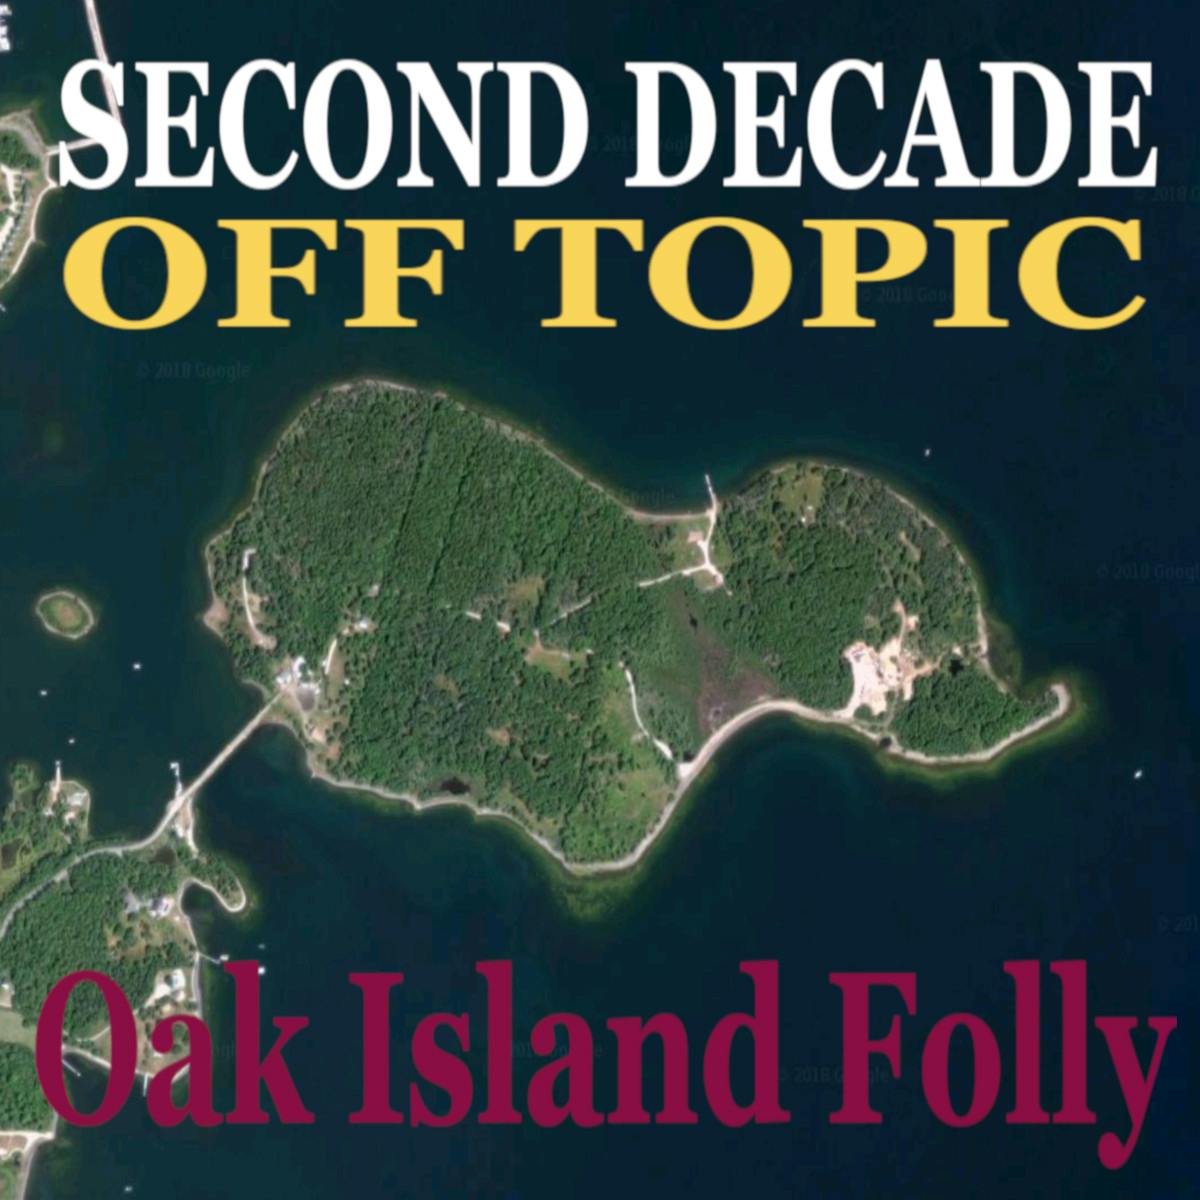 Second Decade Off Topic: The Oak Island Folly